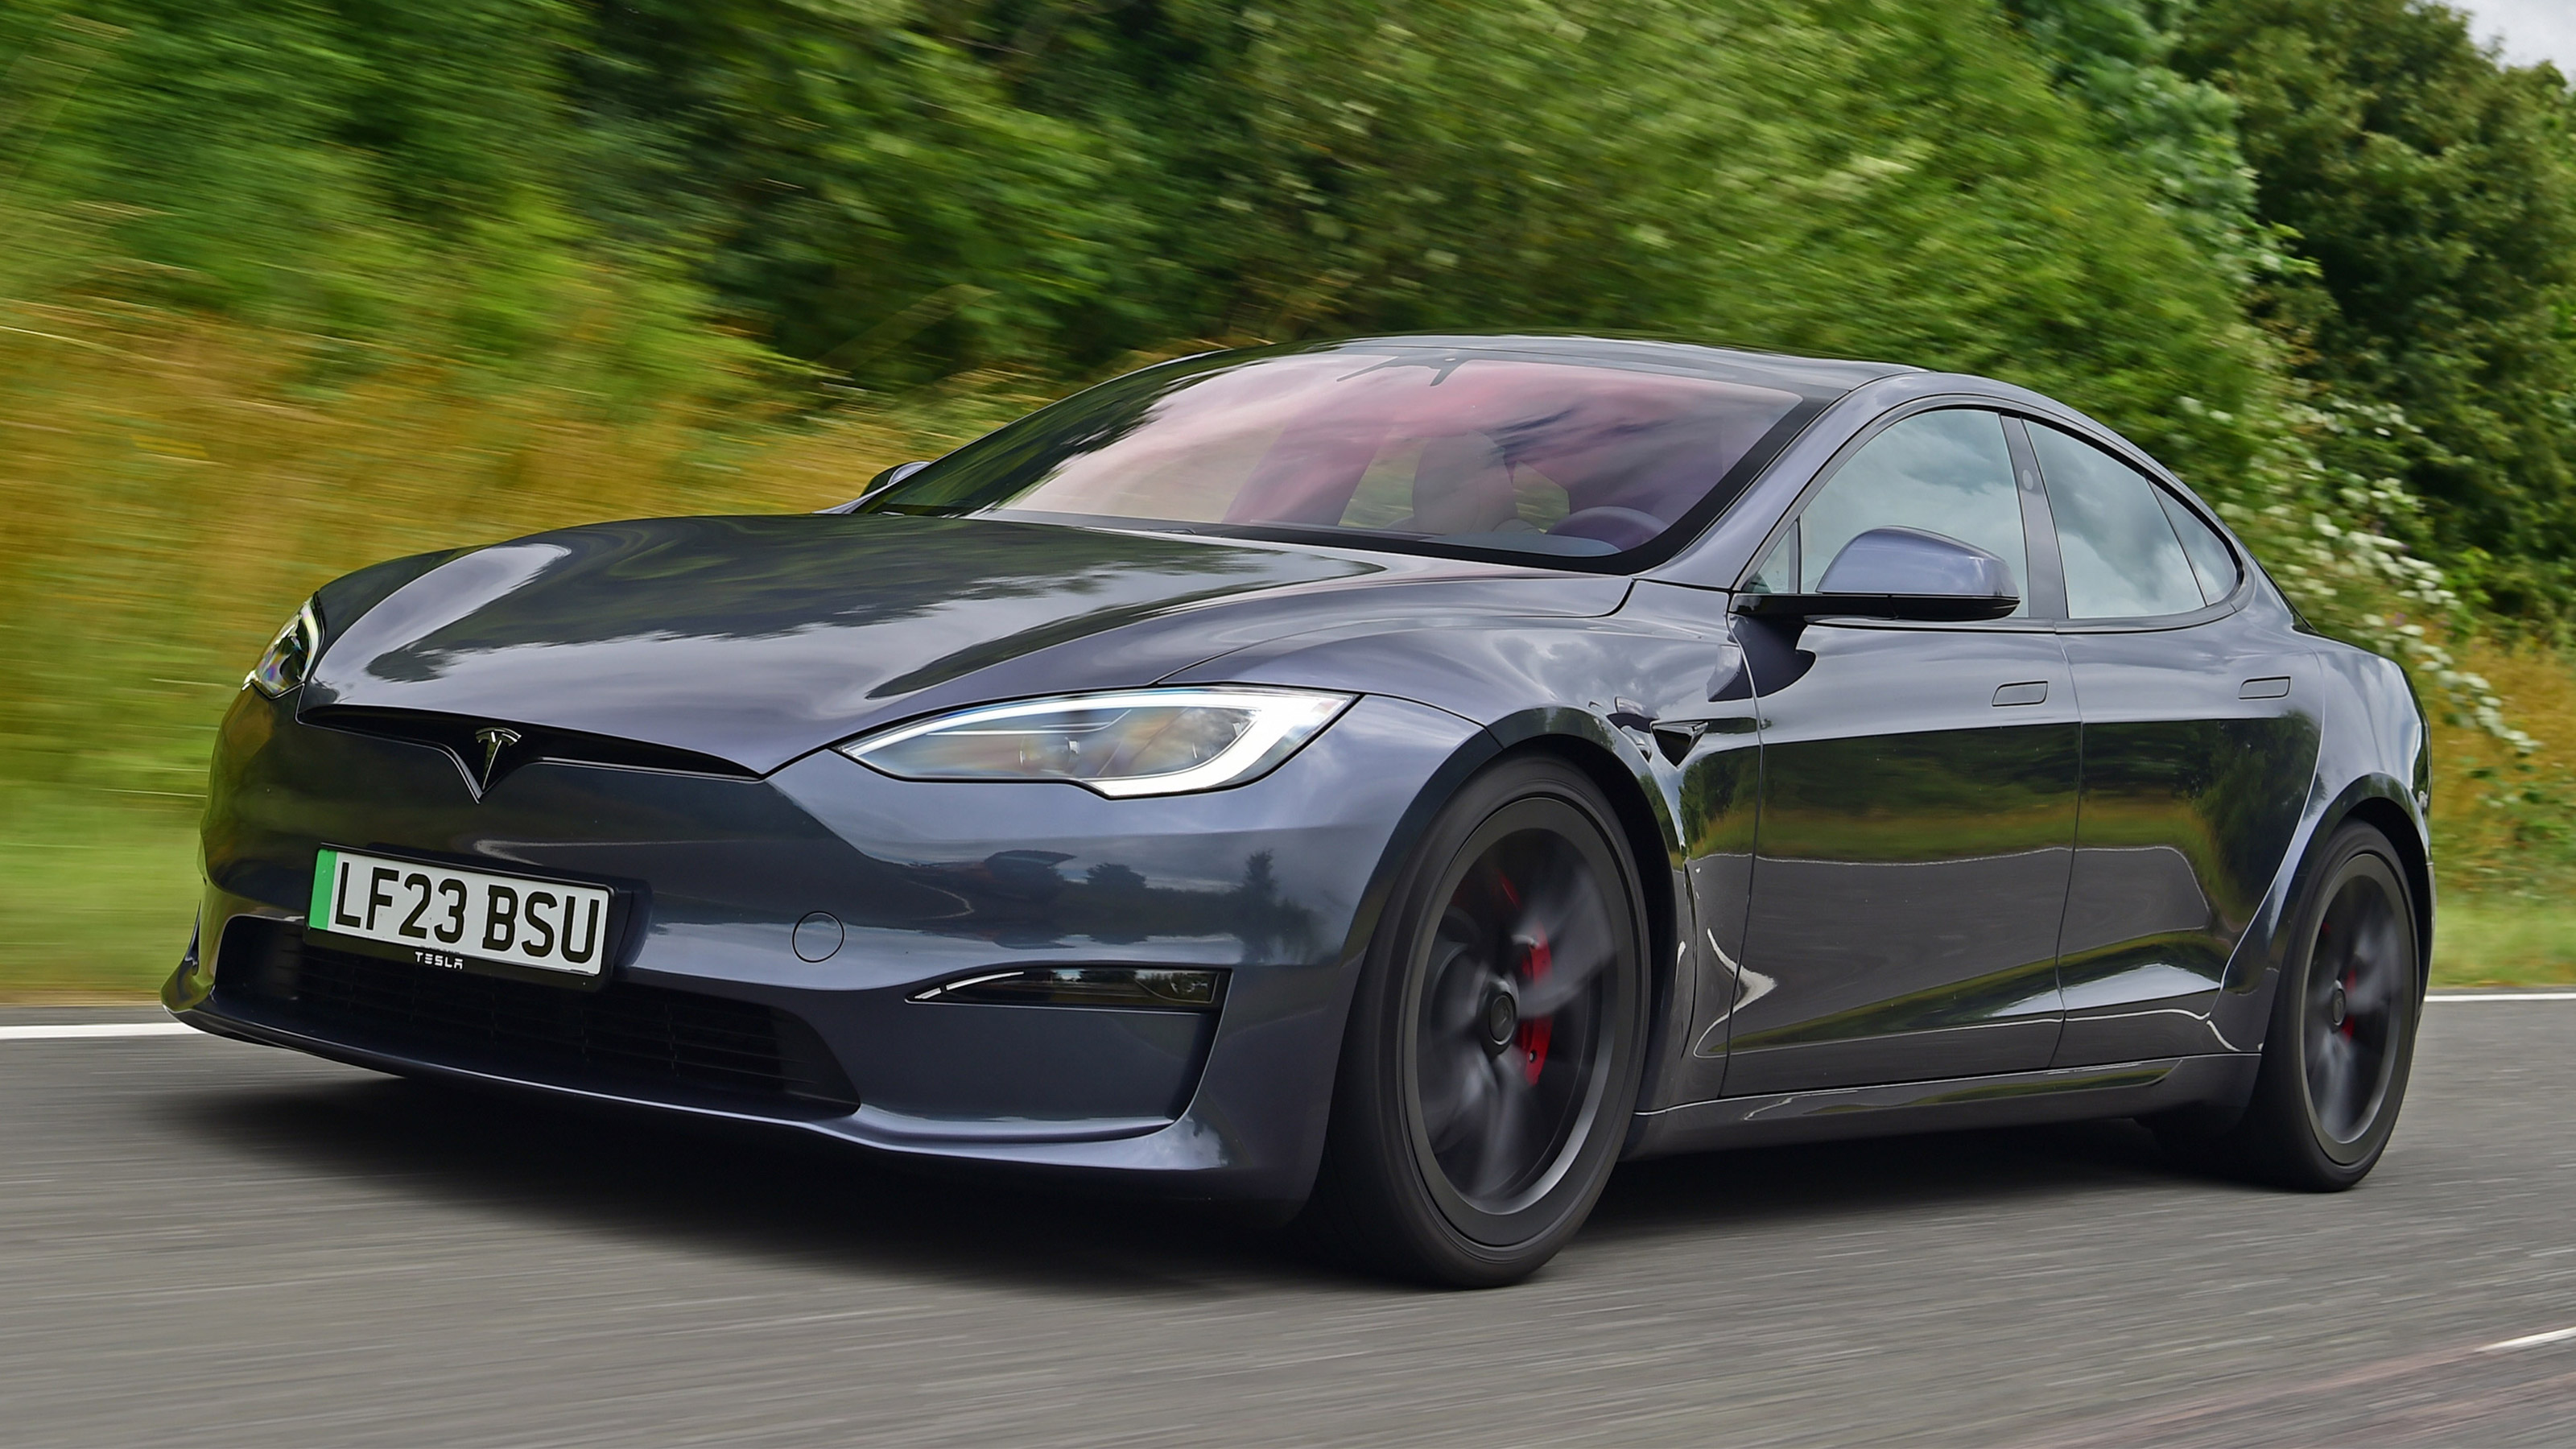 Tesla Model S: Prices, specs, top speed, updates, and more